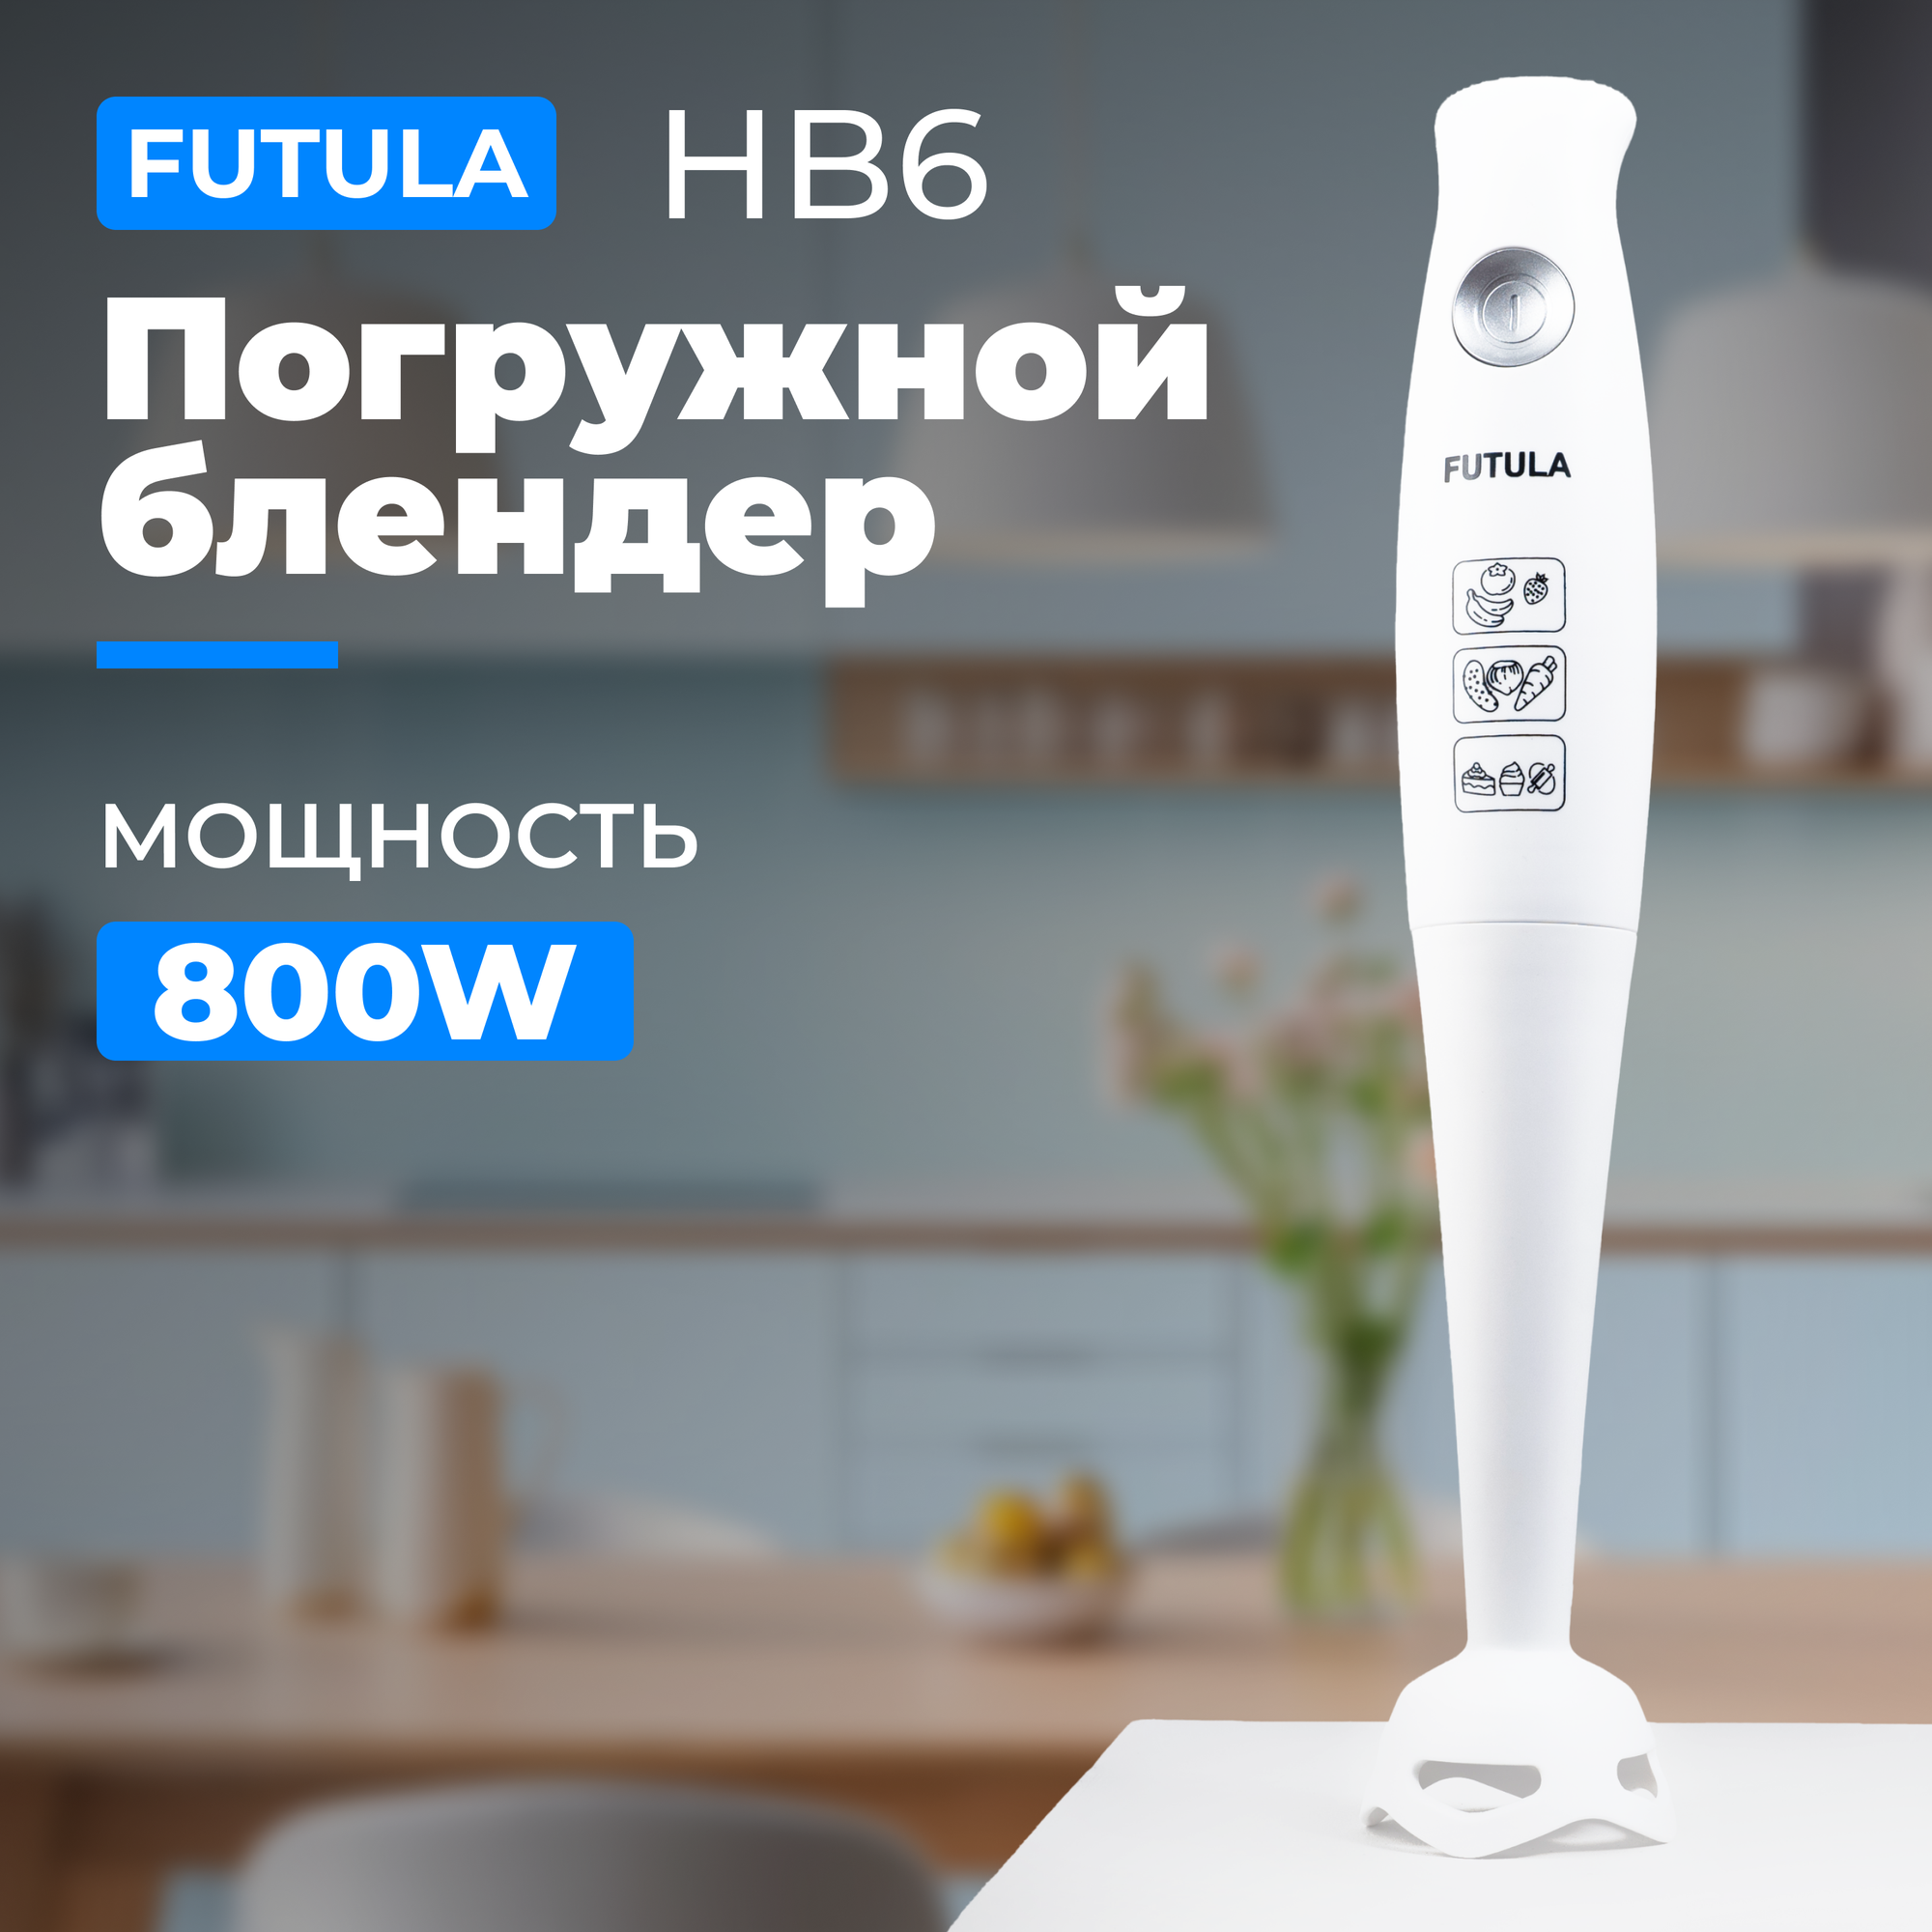 Погружной блендер Futula HB6